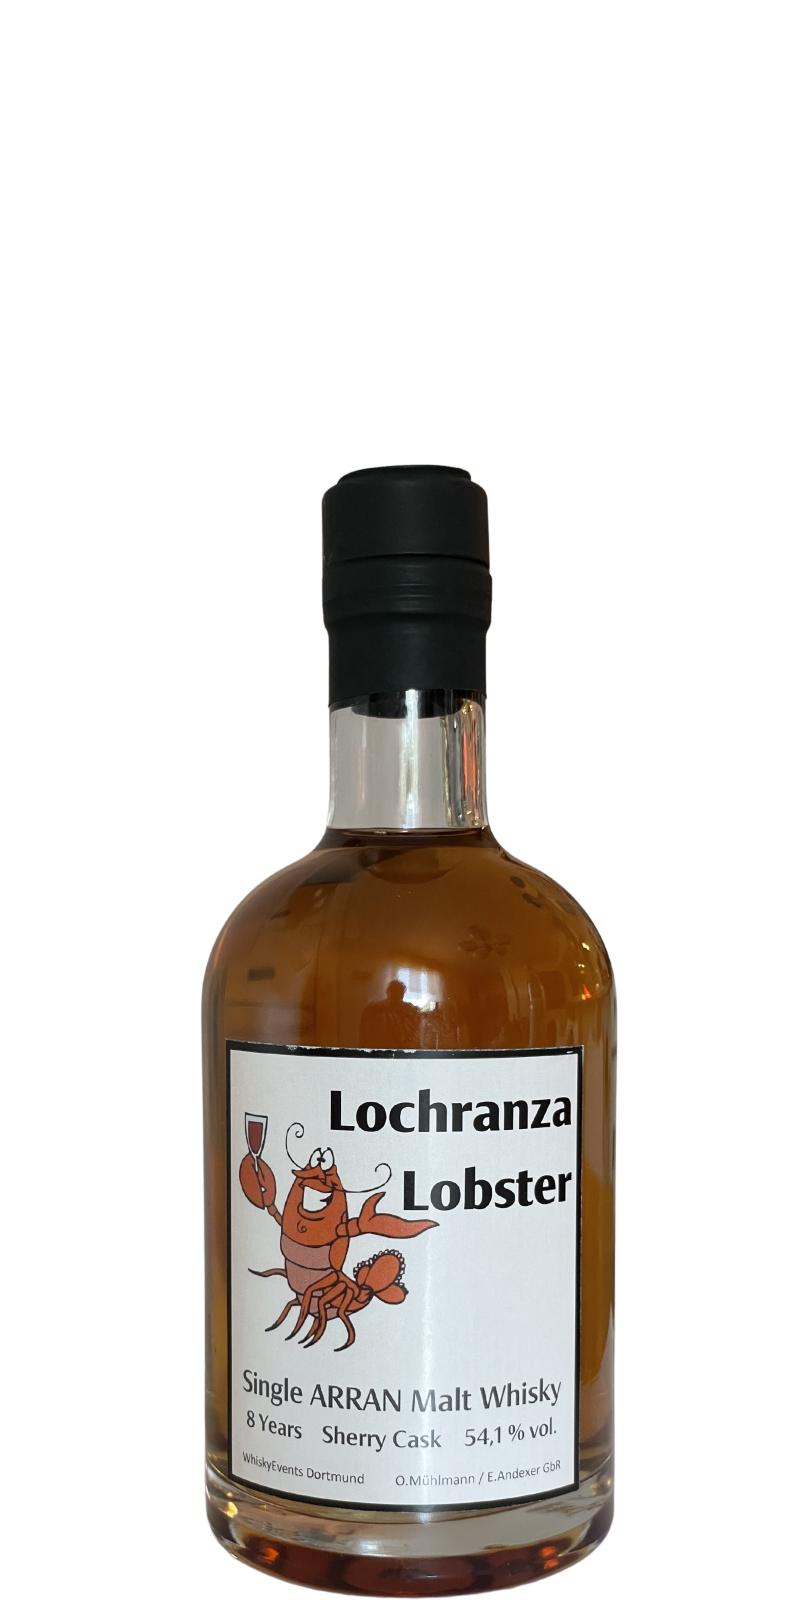 Arran 8yo UD Lochranza Lobster Sherry Cask WhiskyEvents Dortmund 54.1% 350ml